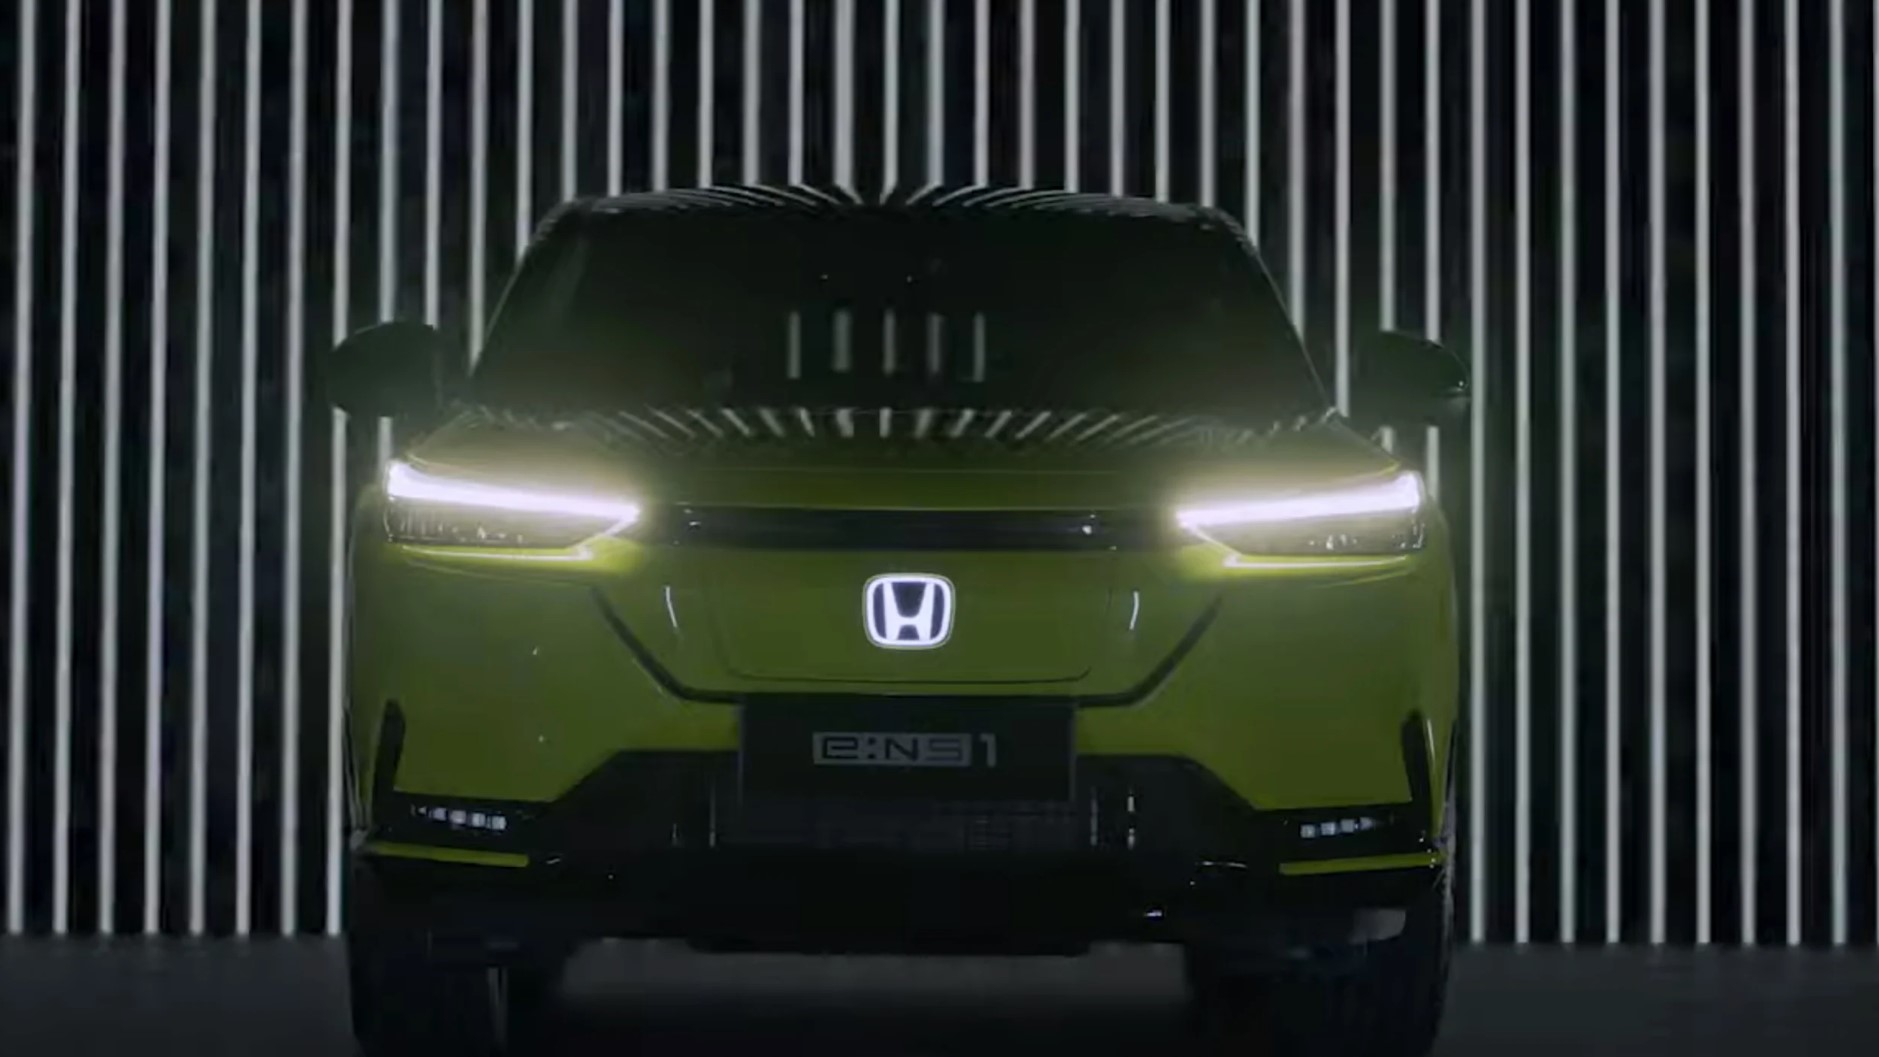 Honda Ens1 reveal 2